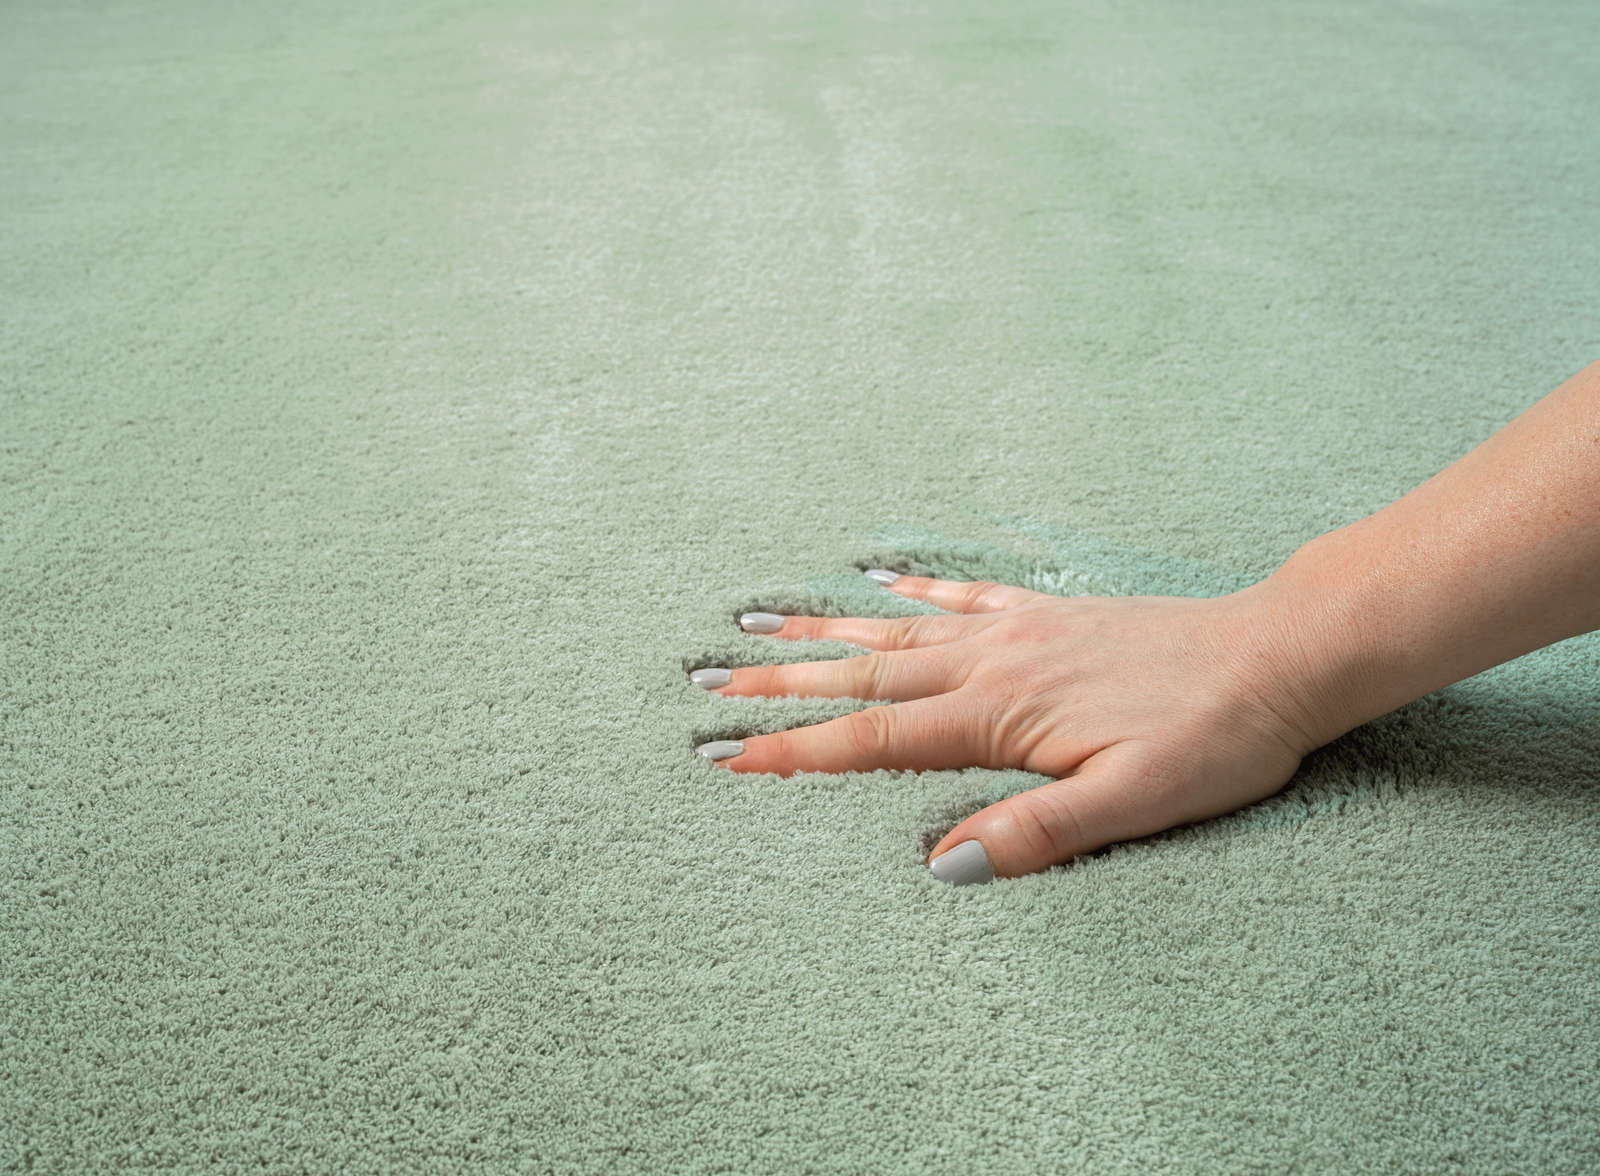             Soft pile carpet in green - 110 x 60 cm
        